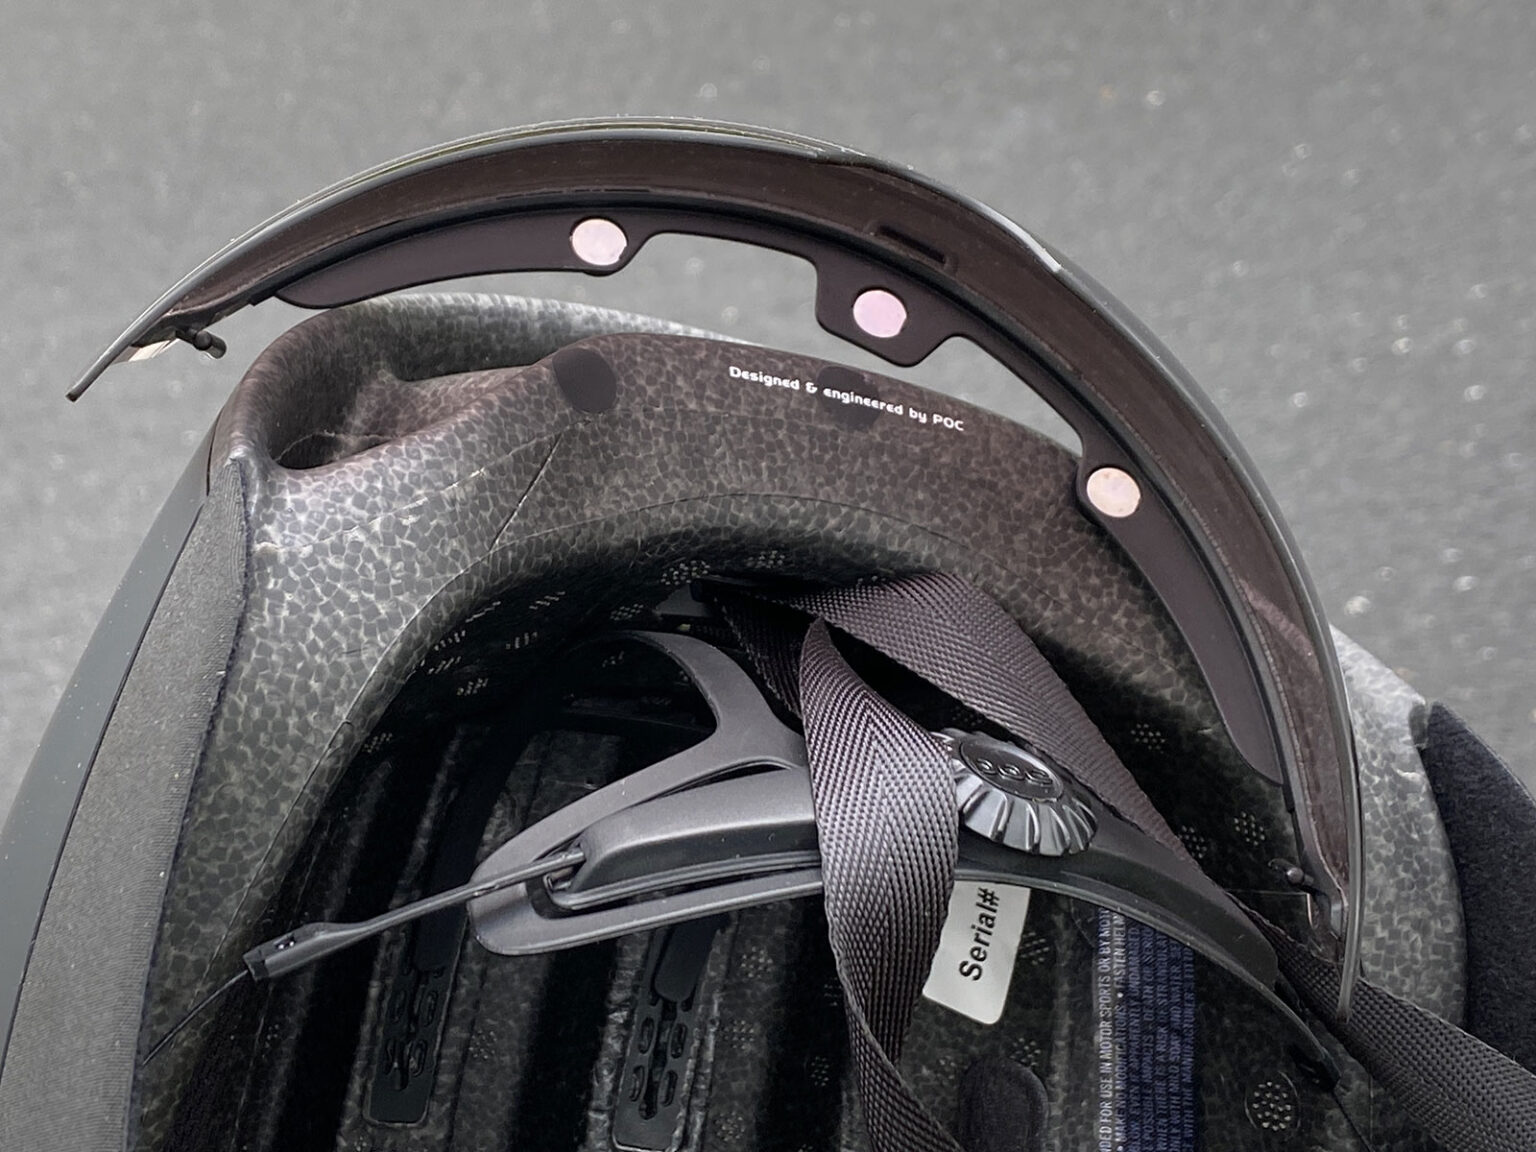 POC Procen Air aero road race helmet Review, magnetic rear visor garage